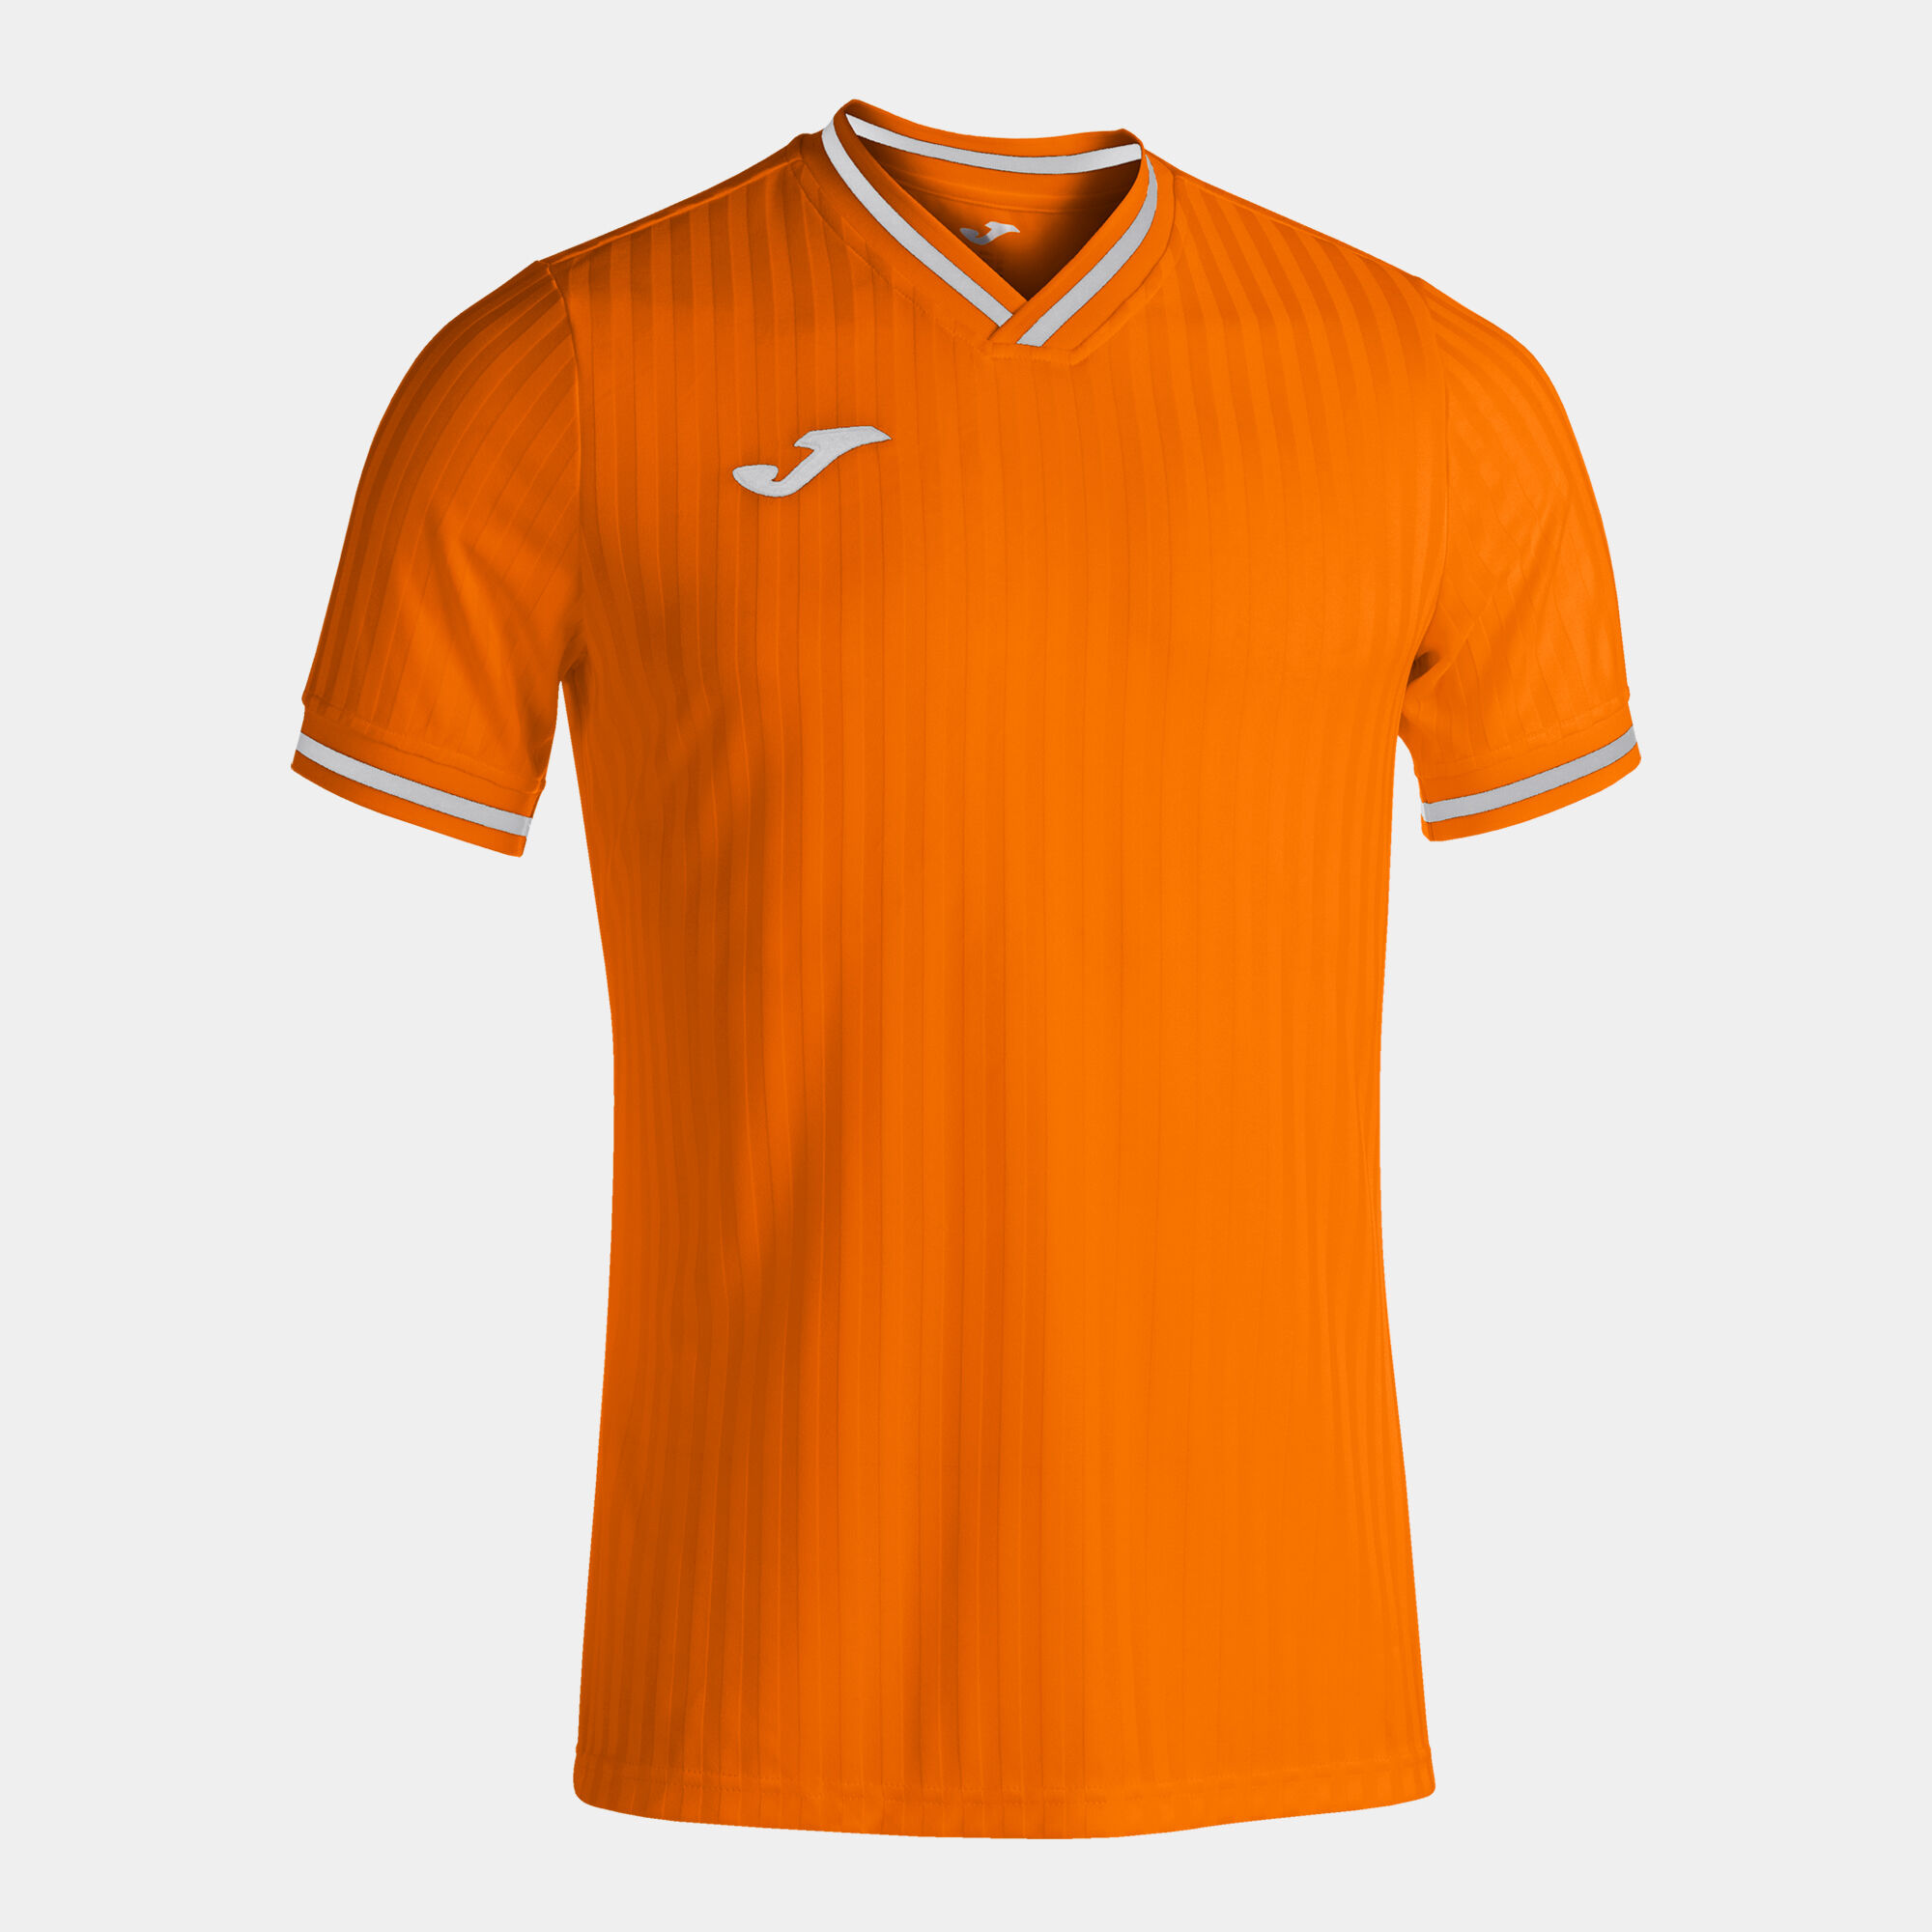 Camiseta manga corta hombre Toletum III naranja